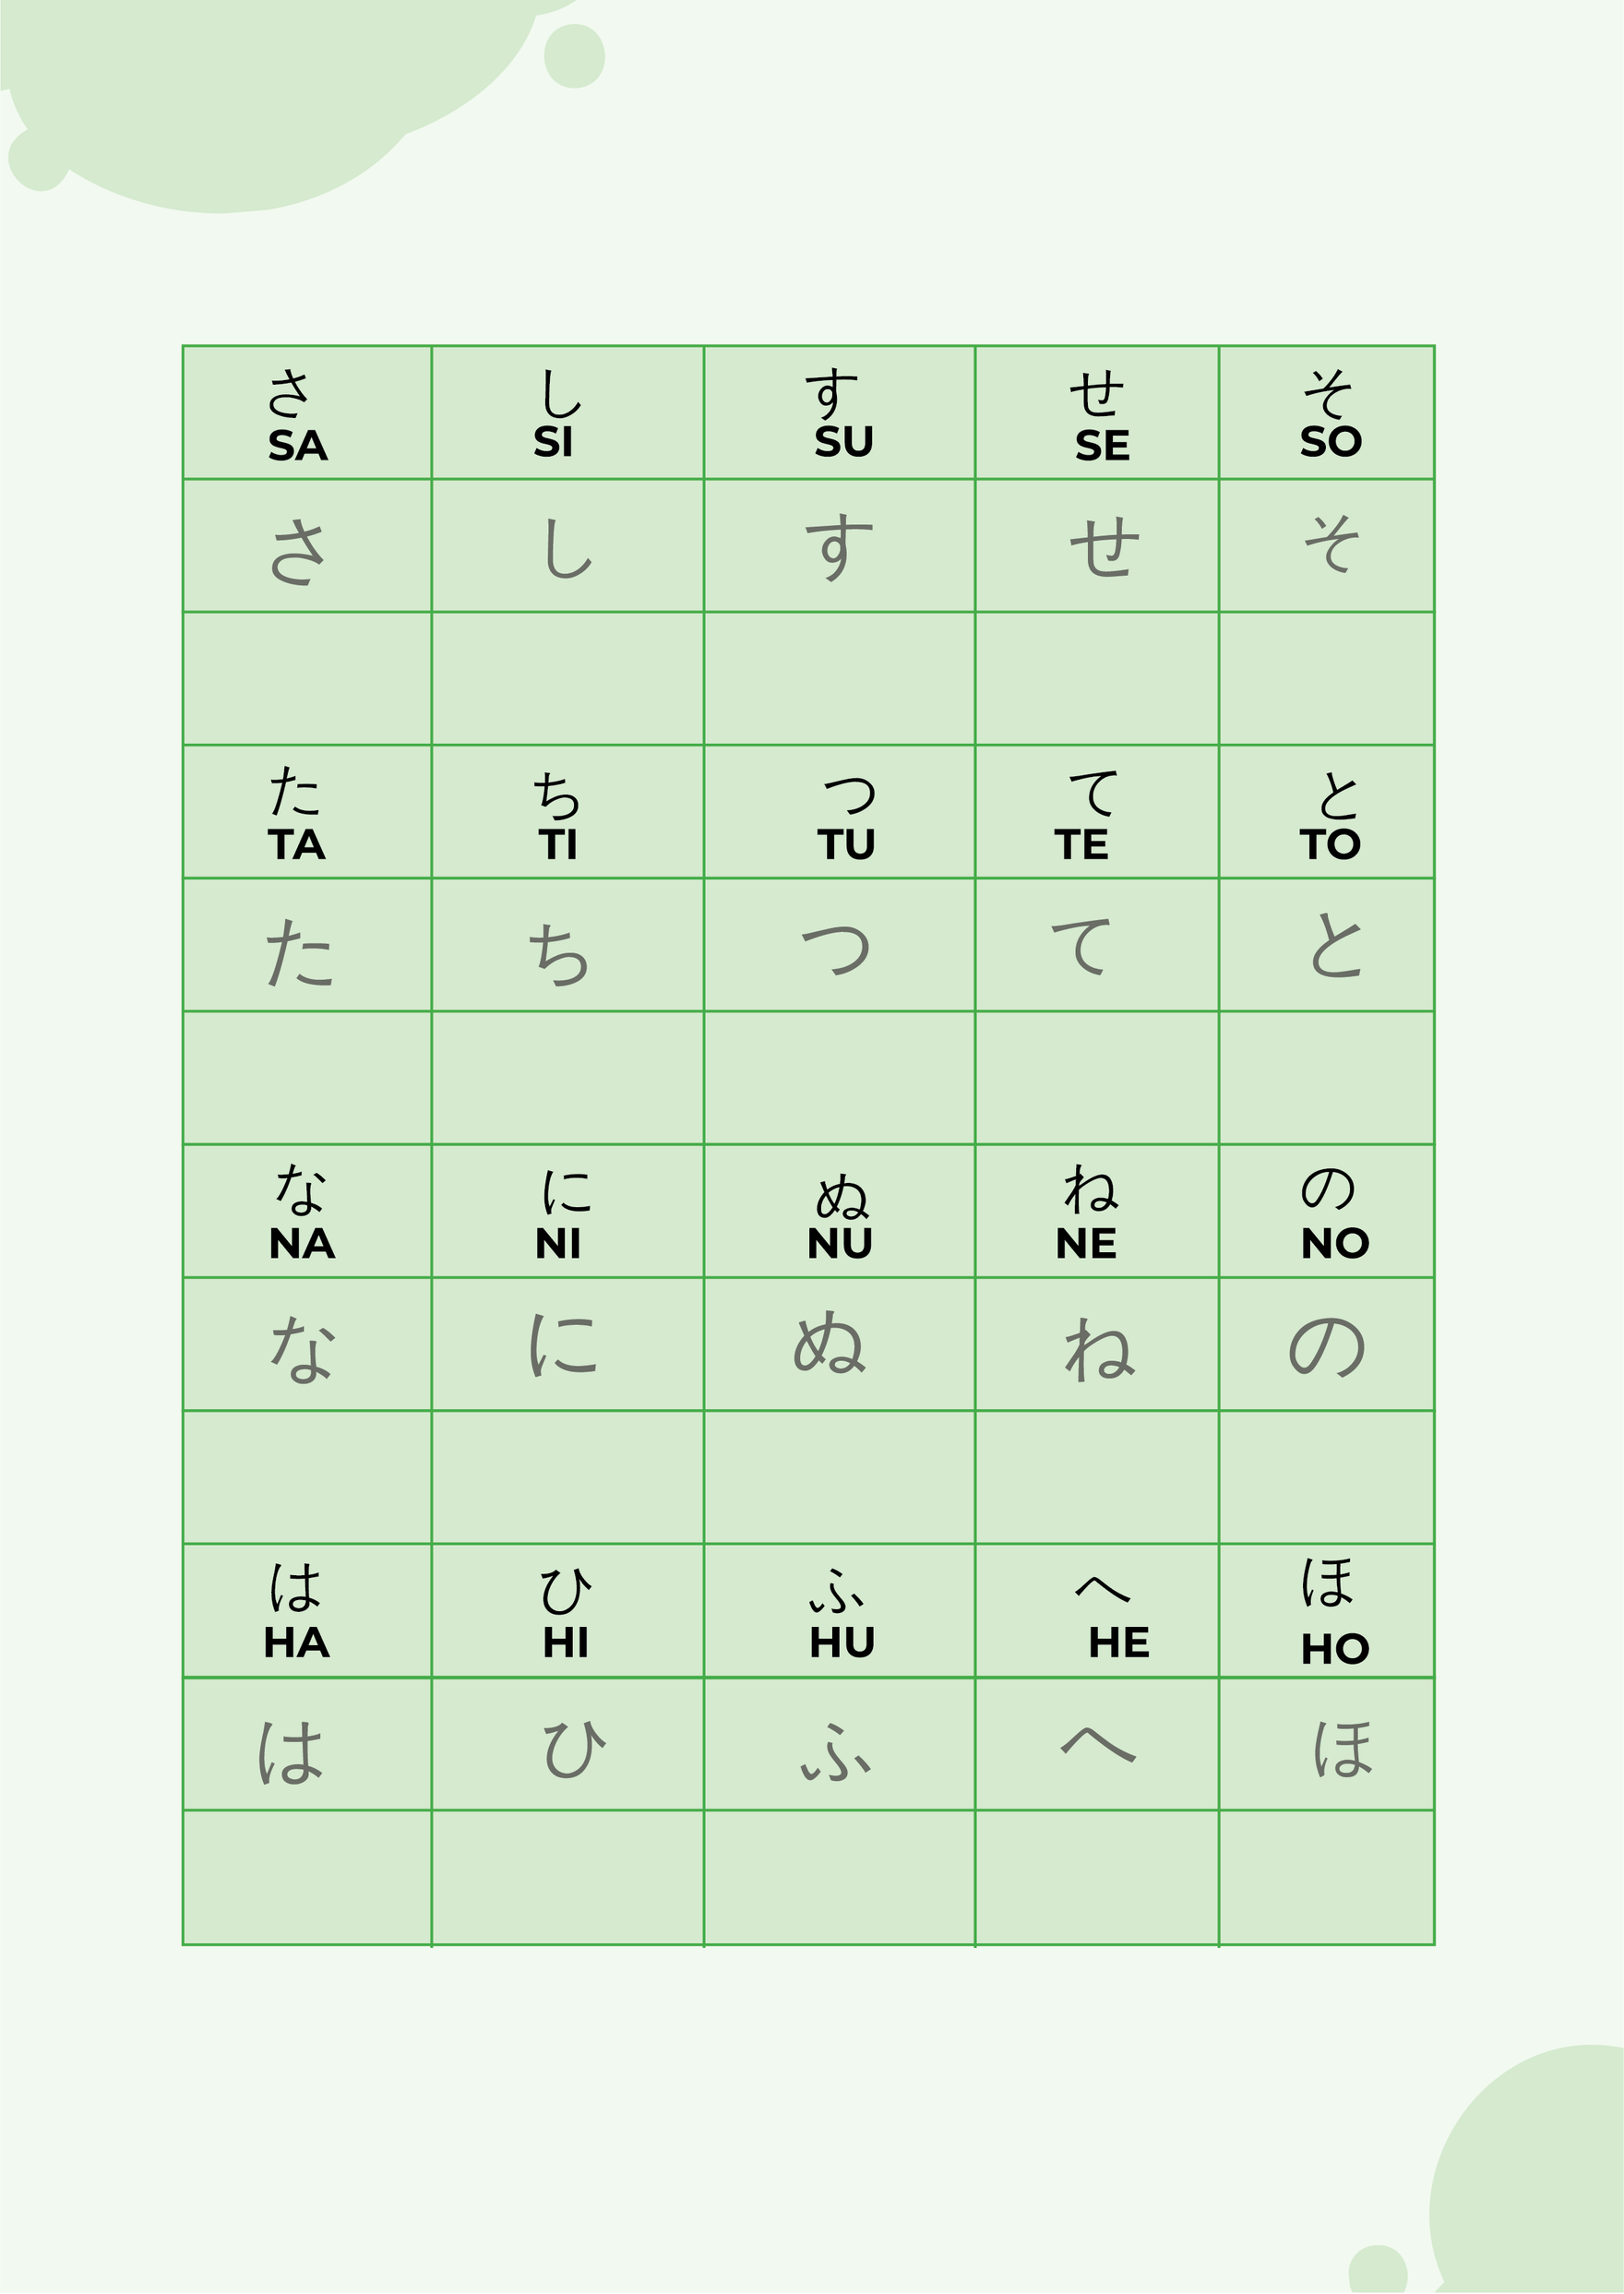 Intermediate Hiragana Katakana Practice Chart